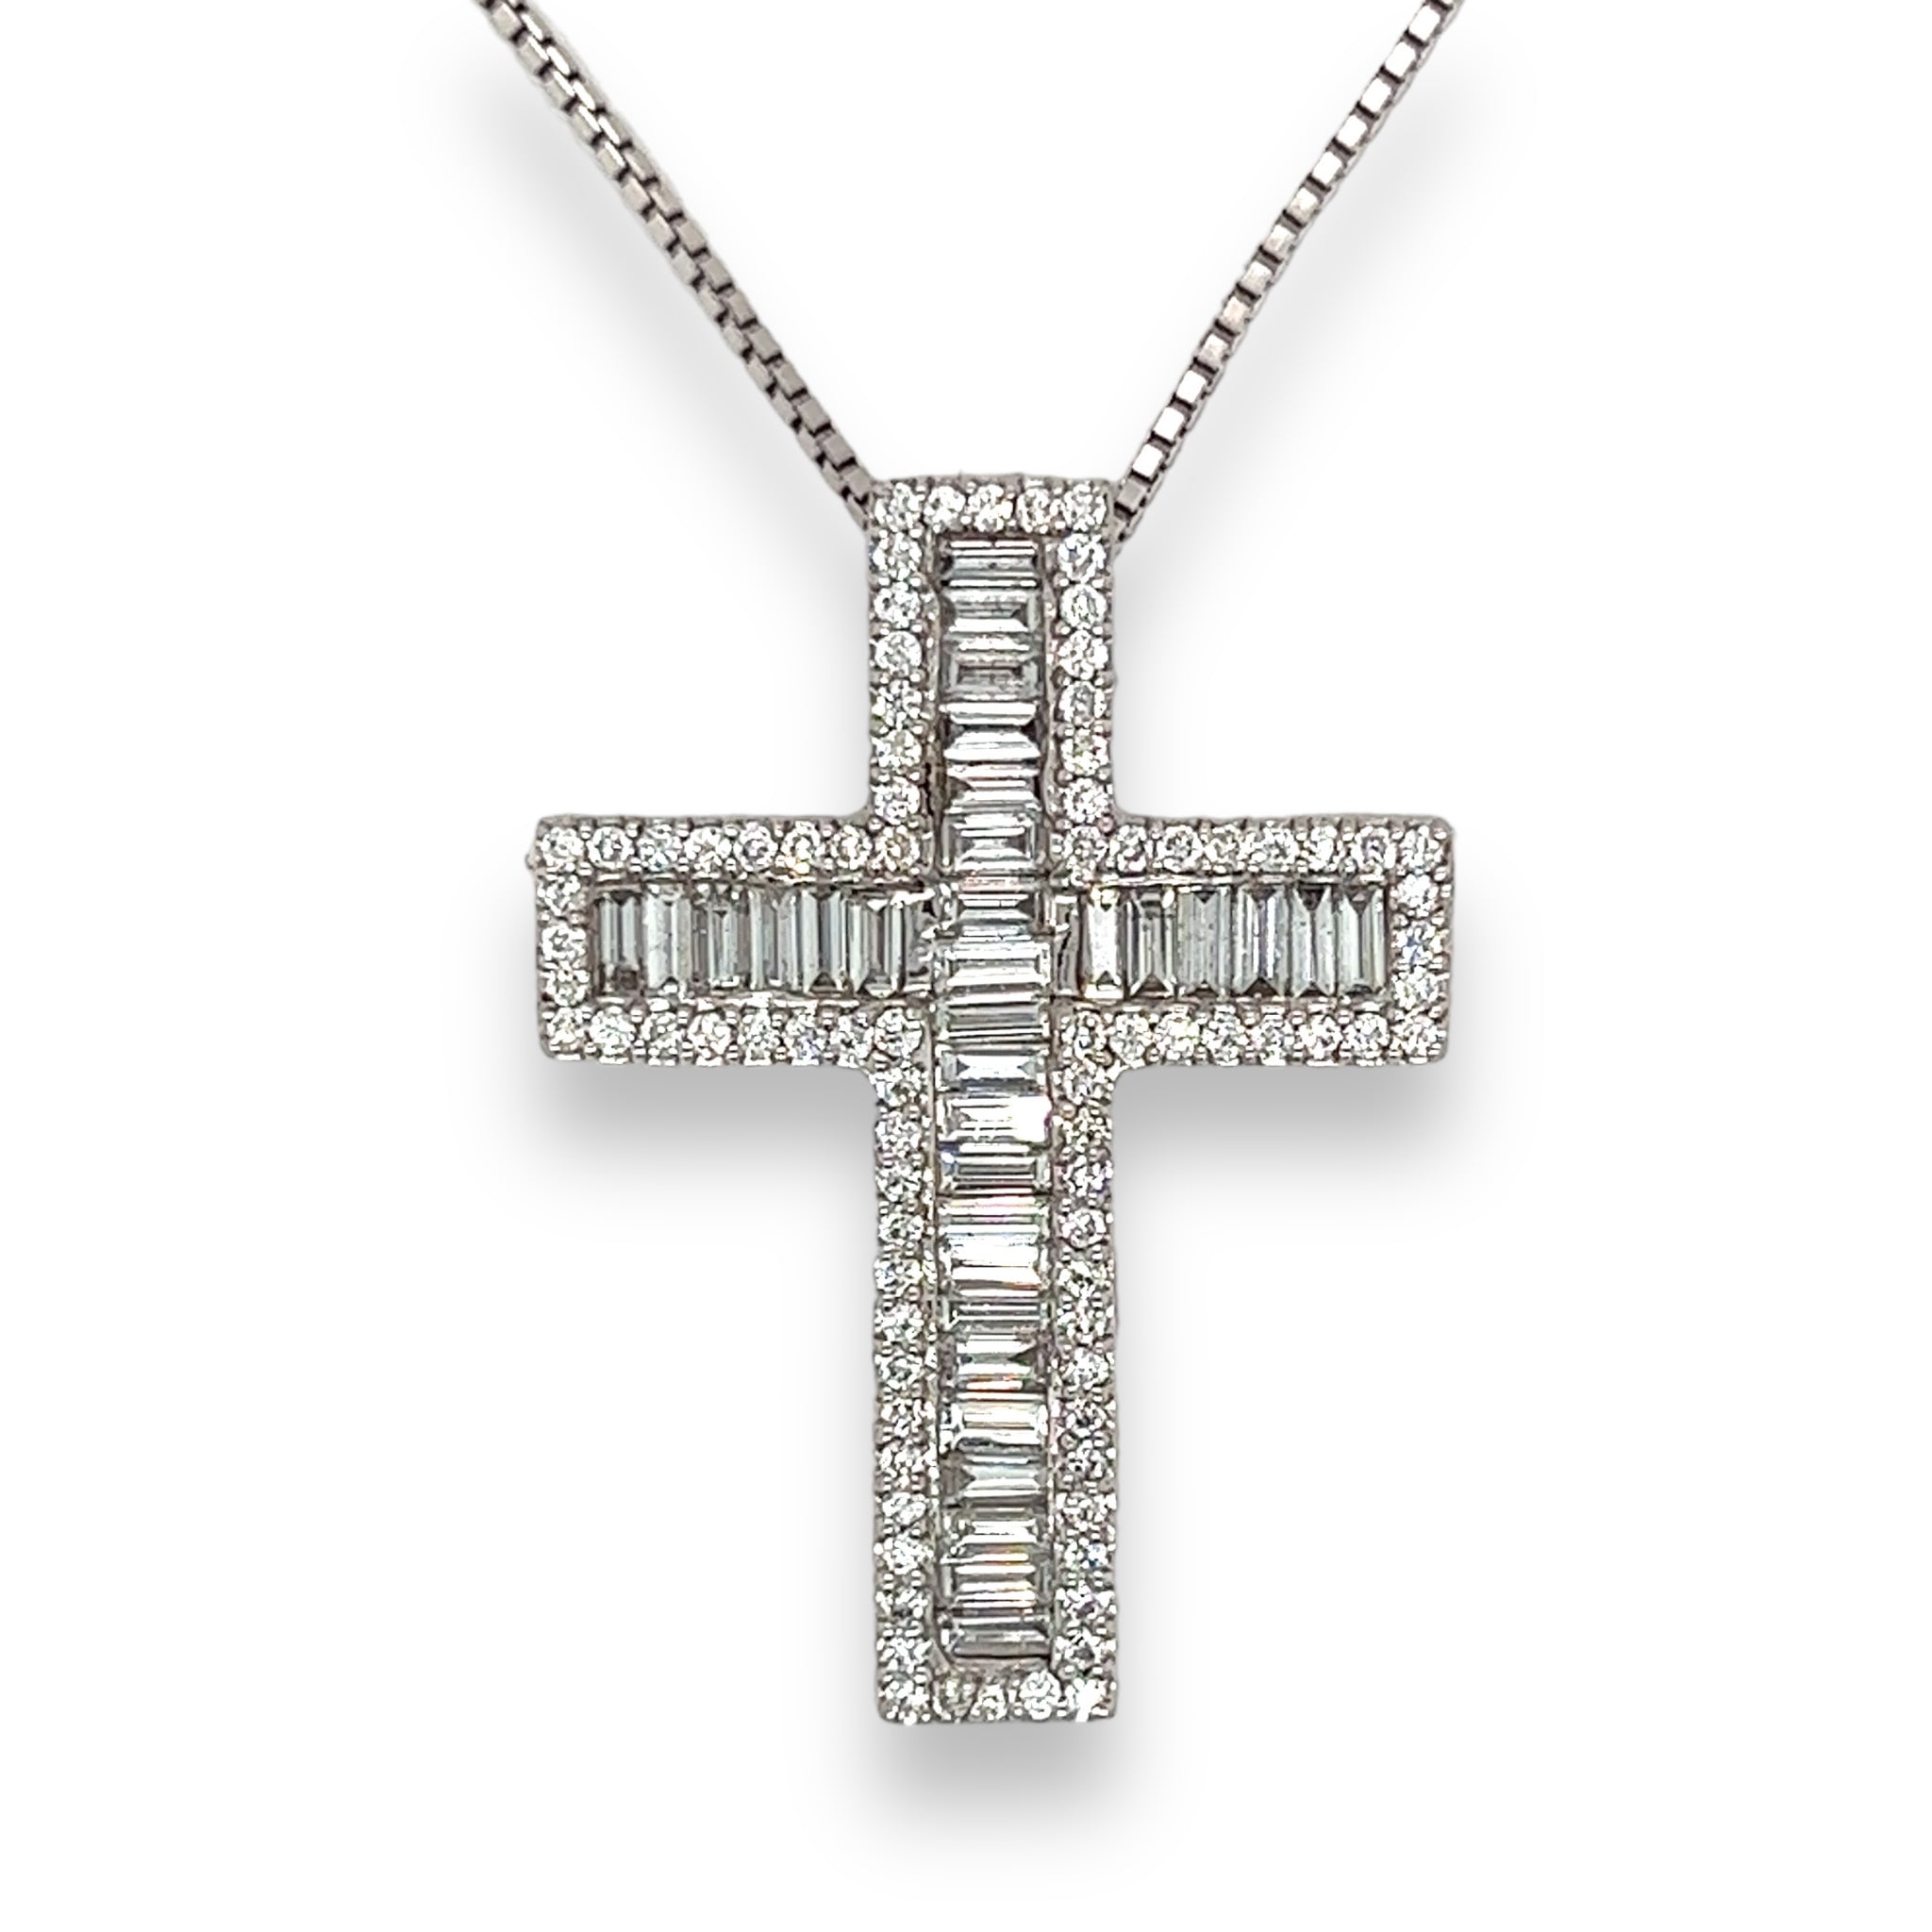 Sideways Cross Necklace by Talisa - Dainty Gold Cross Necklace